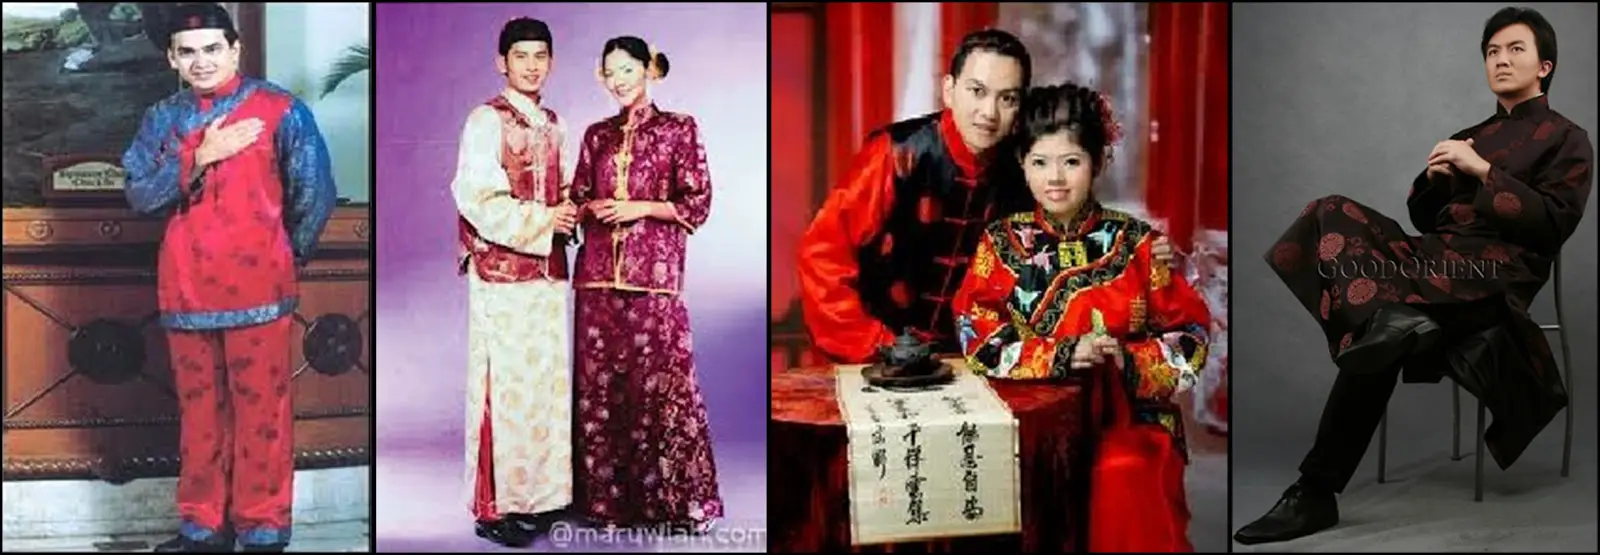 Top 5 Pakaian Tradisional Cina Dan 6 Simbol Di Sebalik Pakaian Bidadari My